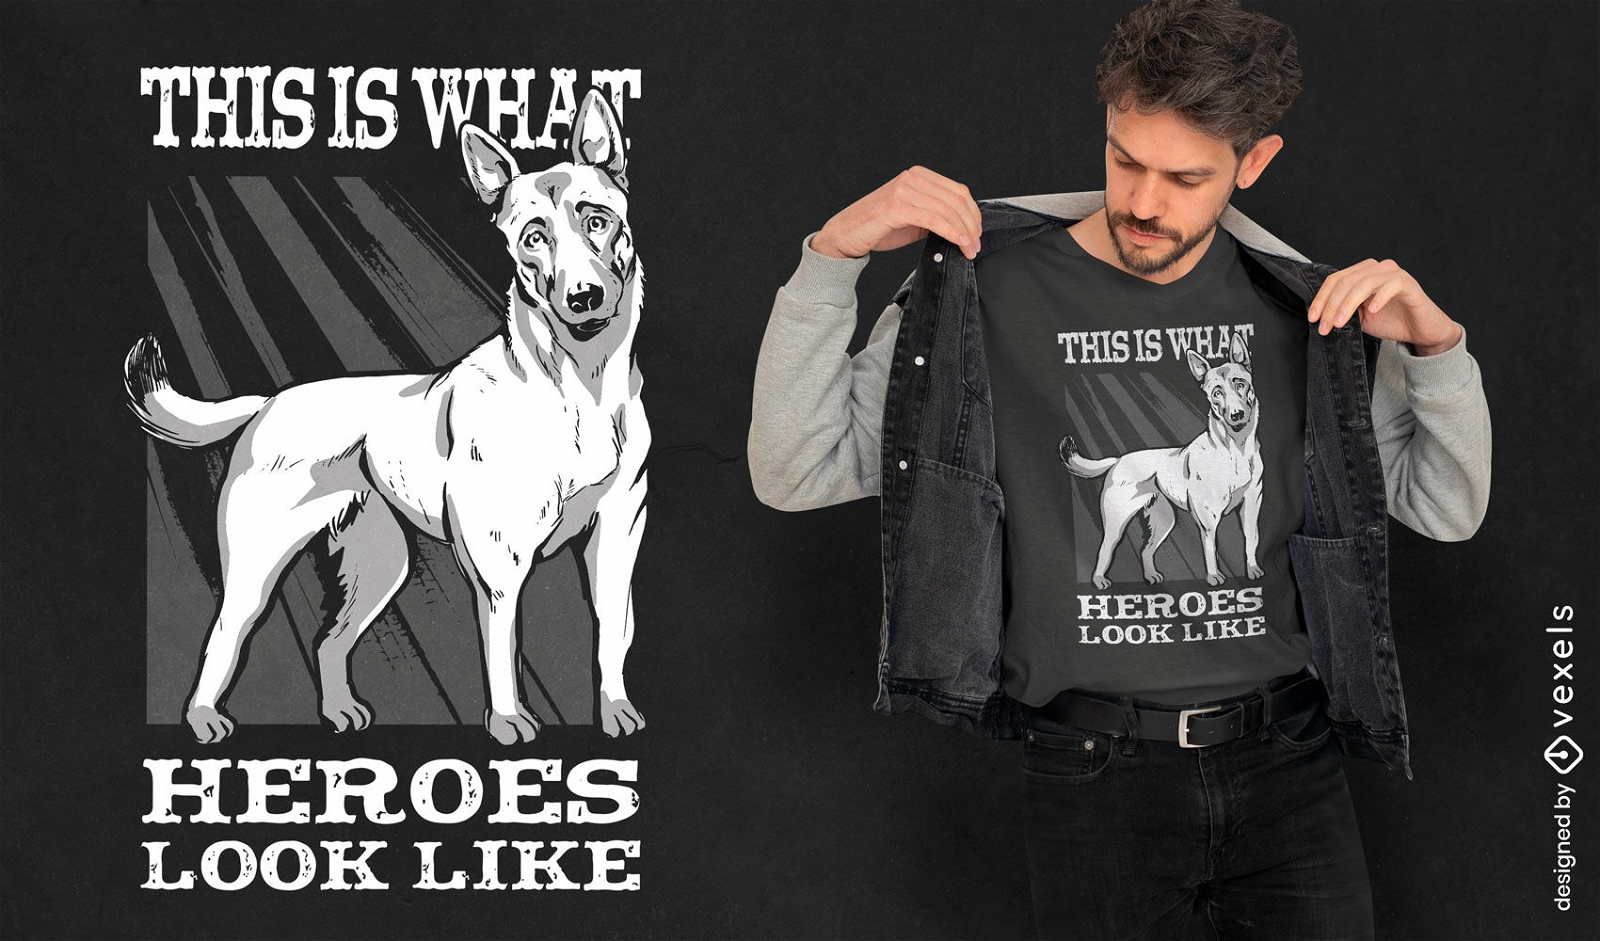 Malinois Belgian dog heroes t-shirt design